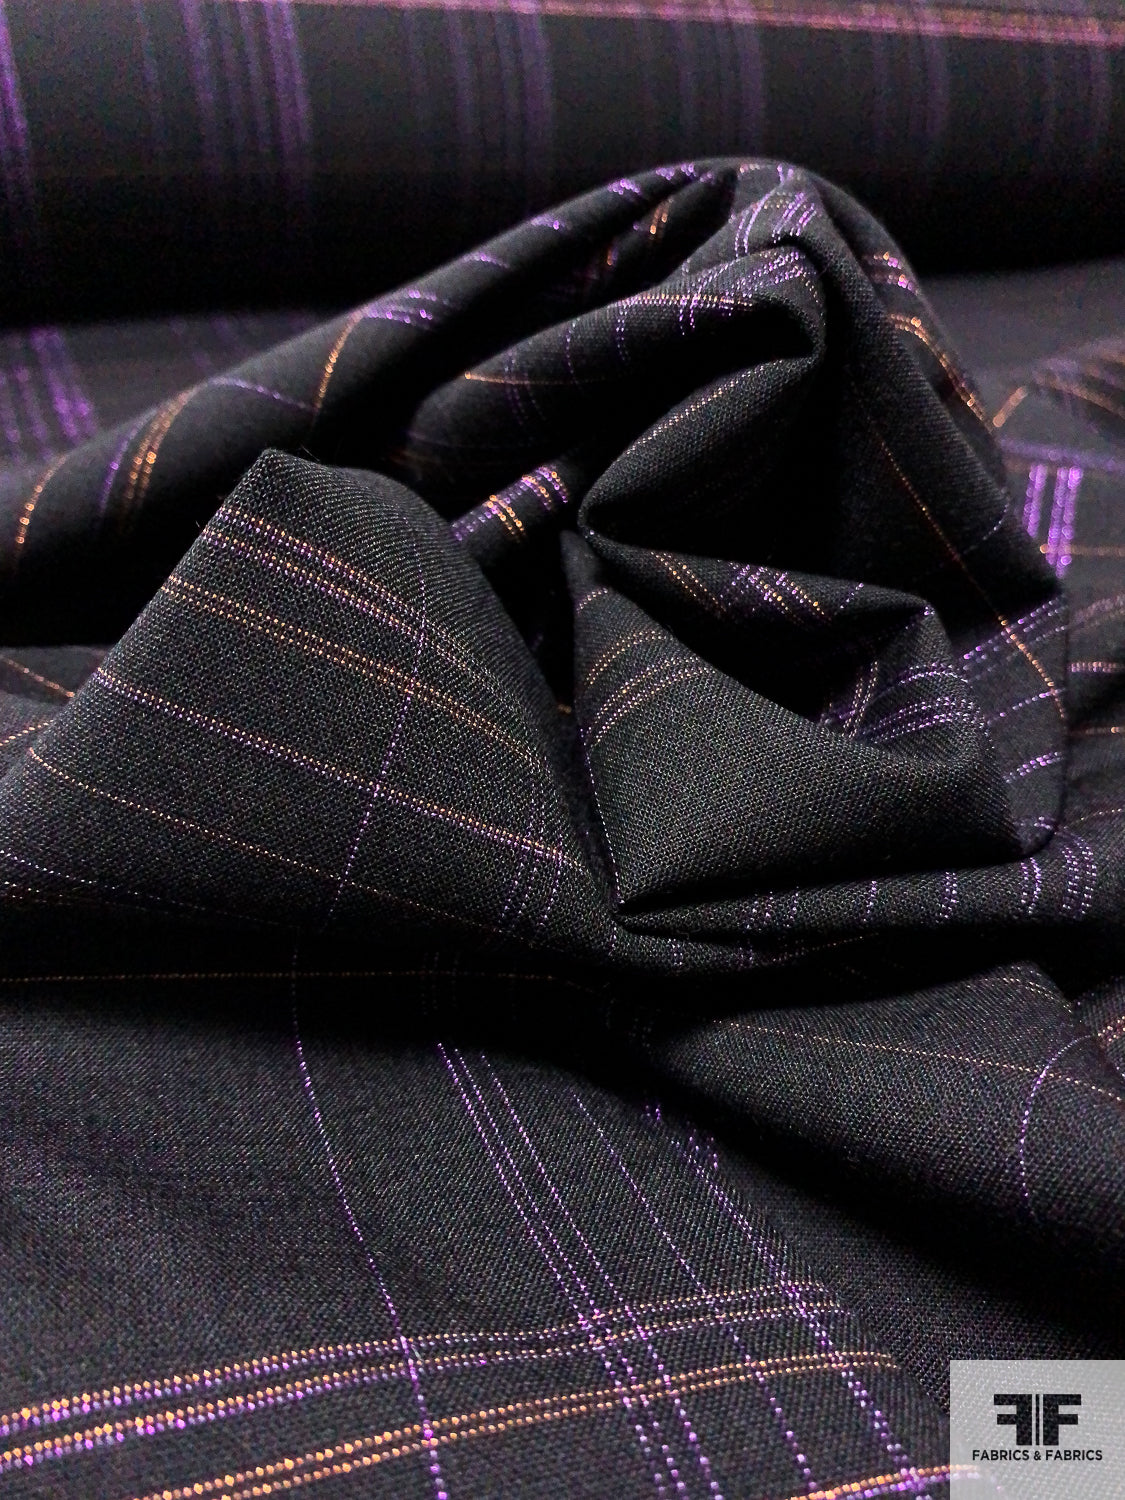 Suiting FABRICS Wool Italian Blend Prabal Fabrics | Rose & Plaid – Gurung Lines Gold - Metallic & Violet/Metallic Black/Metallic FABRICS Fabrics